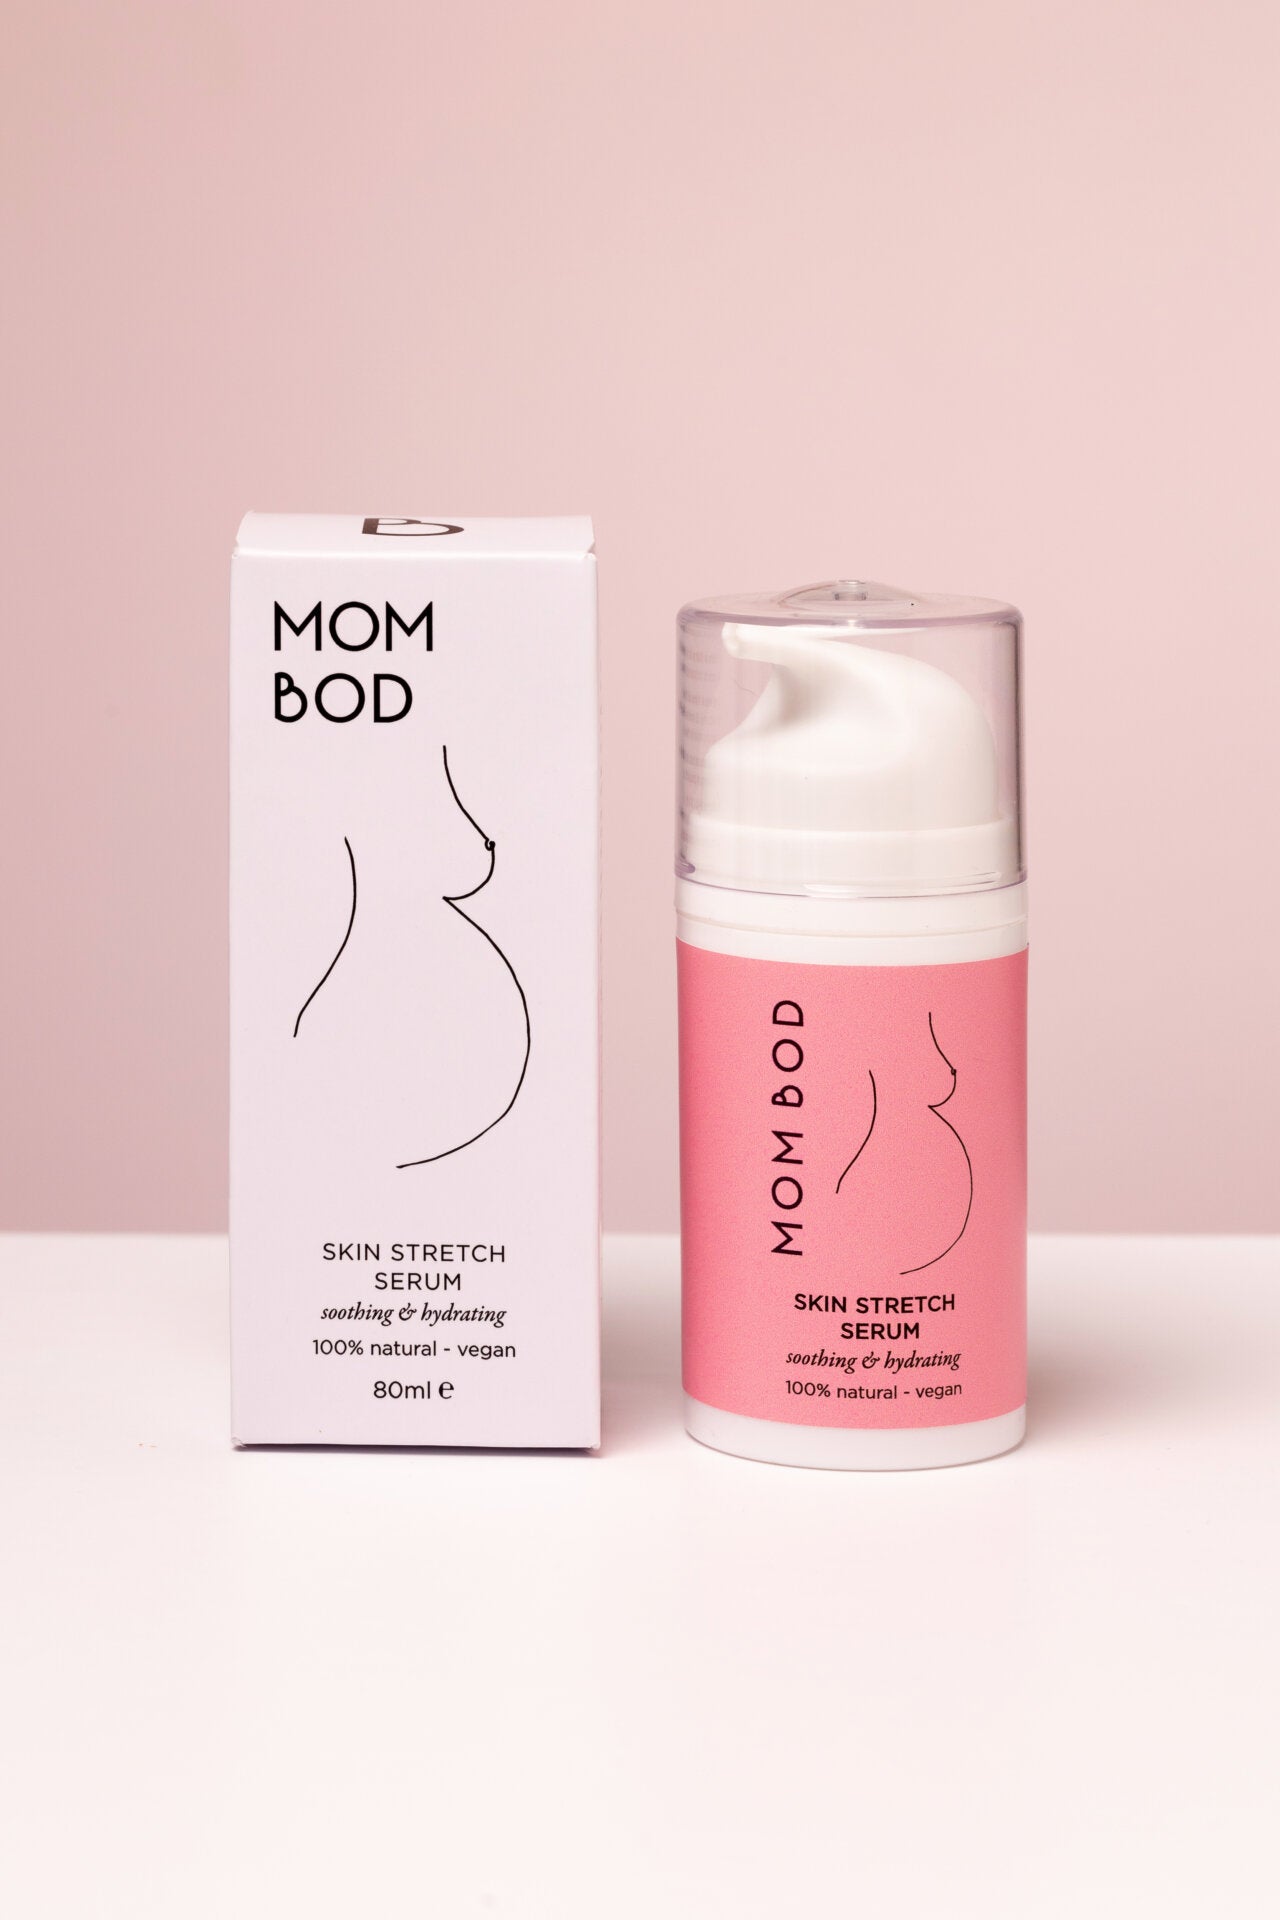 Mom Bod – Skin Stretch Serum